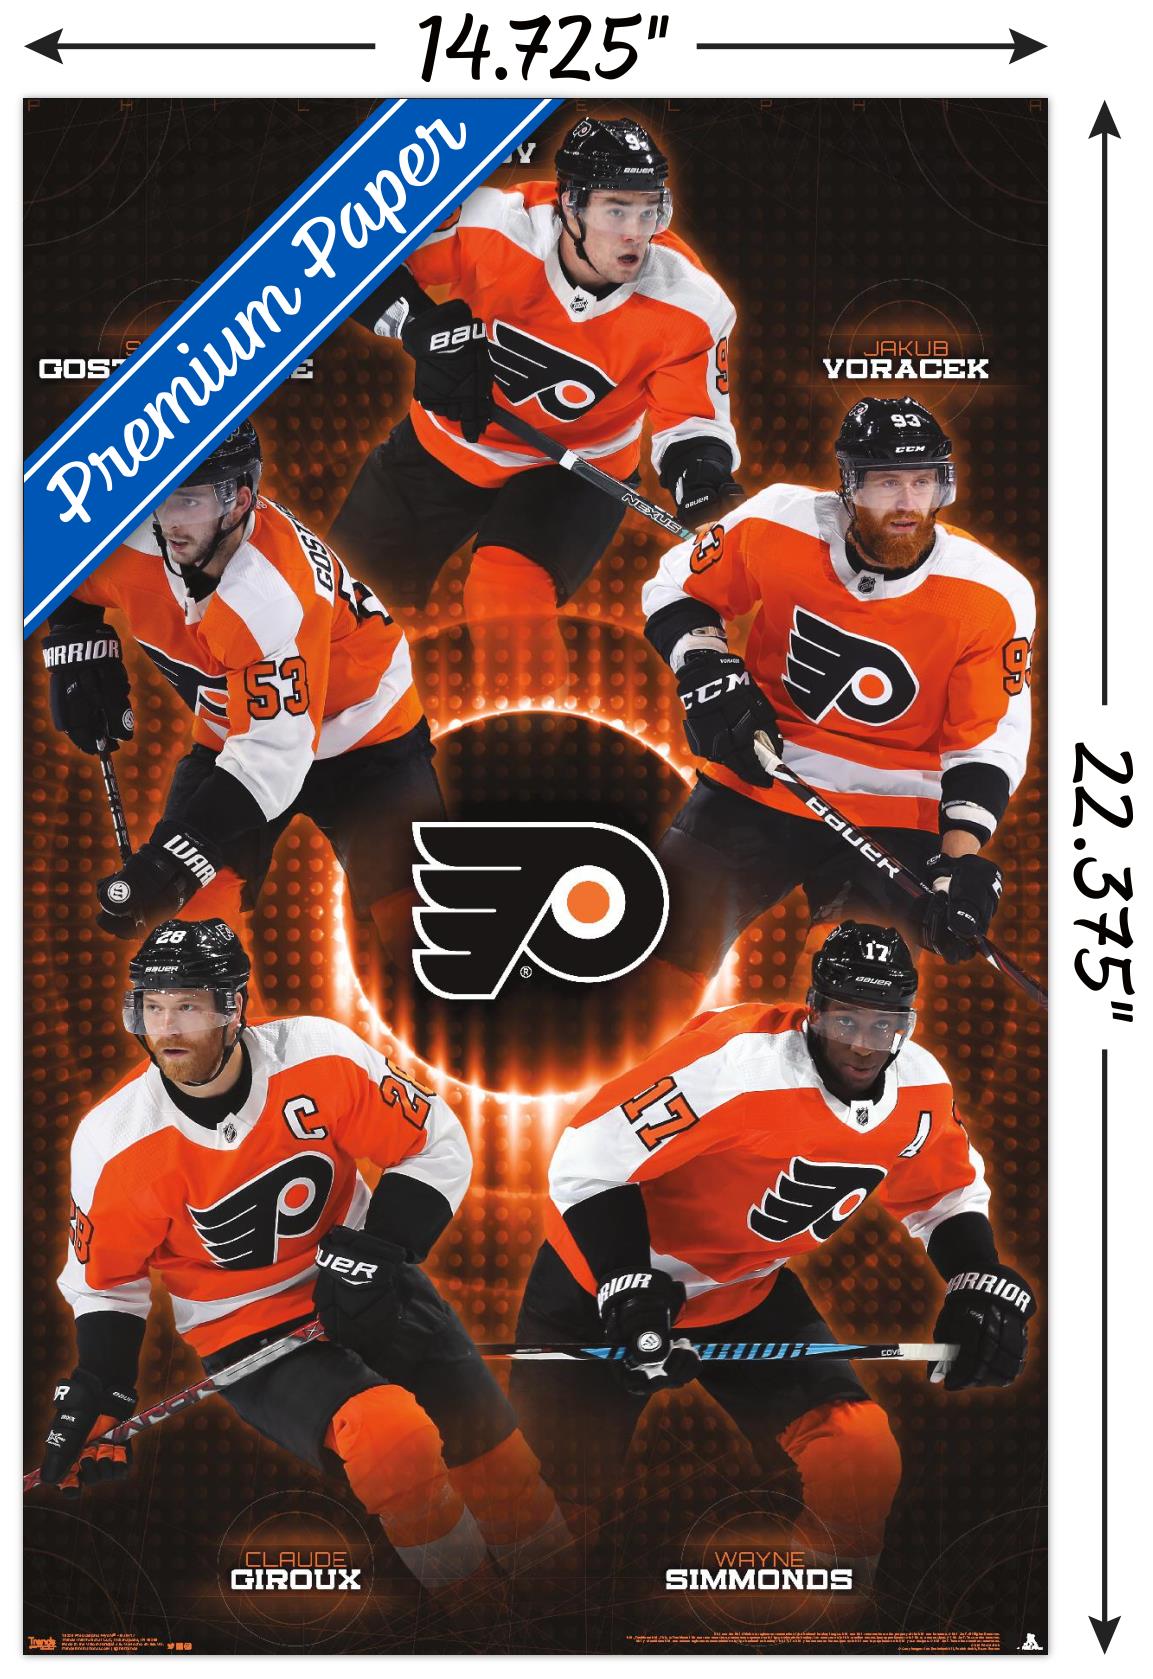 Trends International NHL Philadelphia Flyers - Team 17 Wall Poster 14.725" x 22.375" Premium Poster & Mount Bundle - image 3 of 5